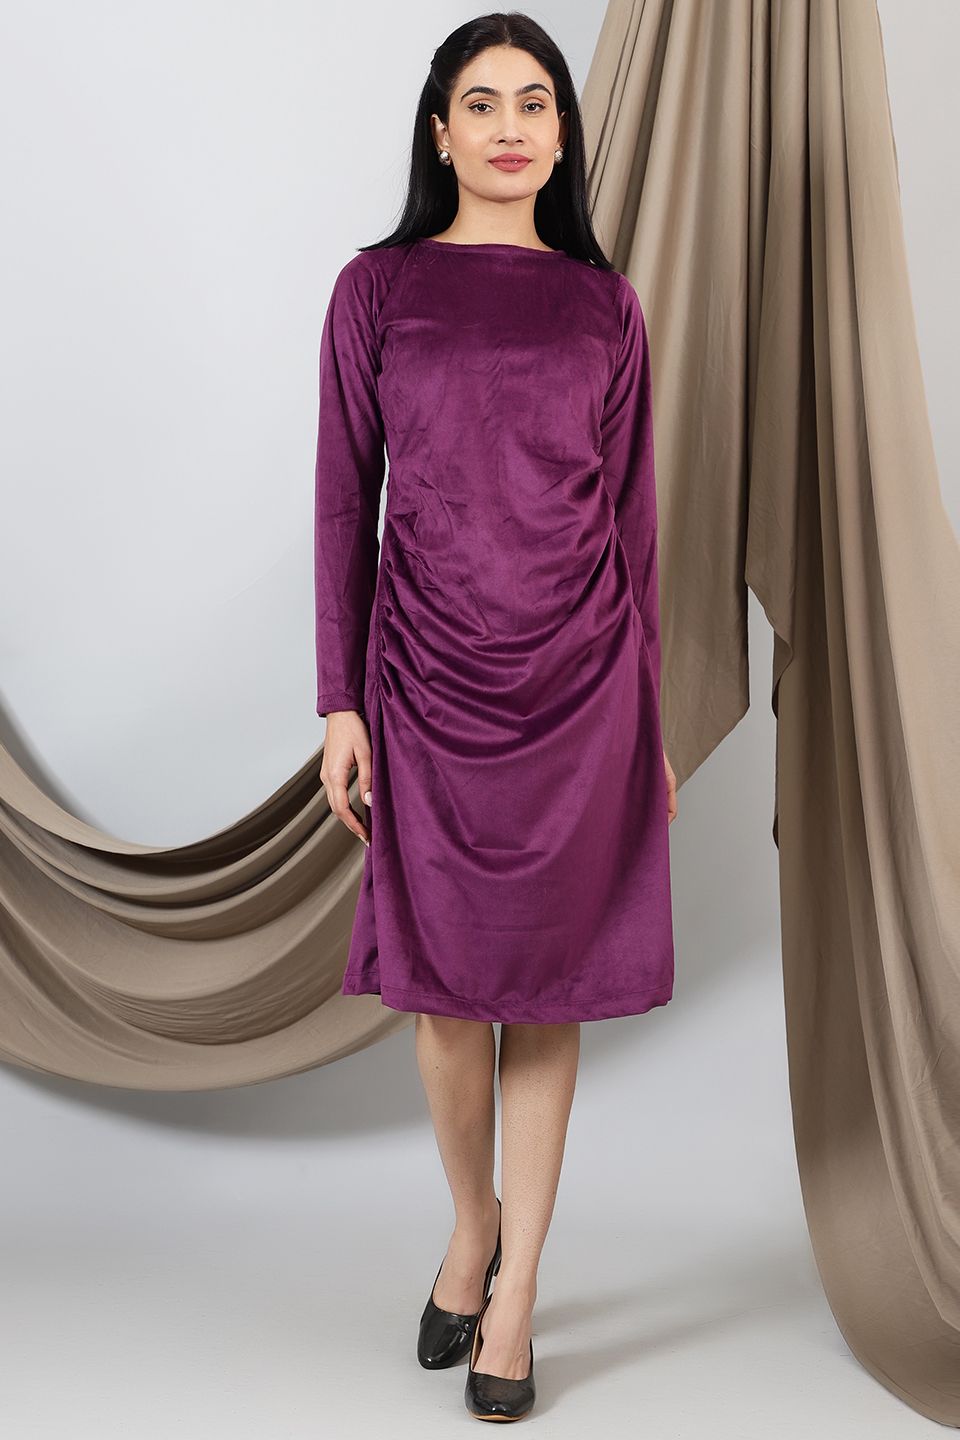 Velvet-Purple-Cotton-Midi-Dress-DS322